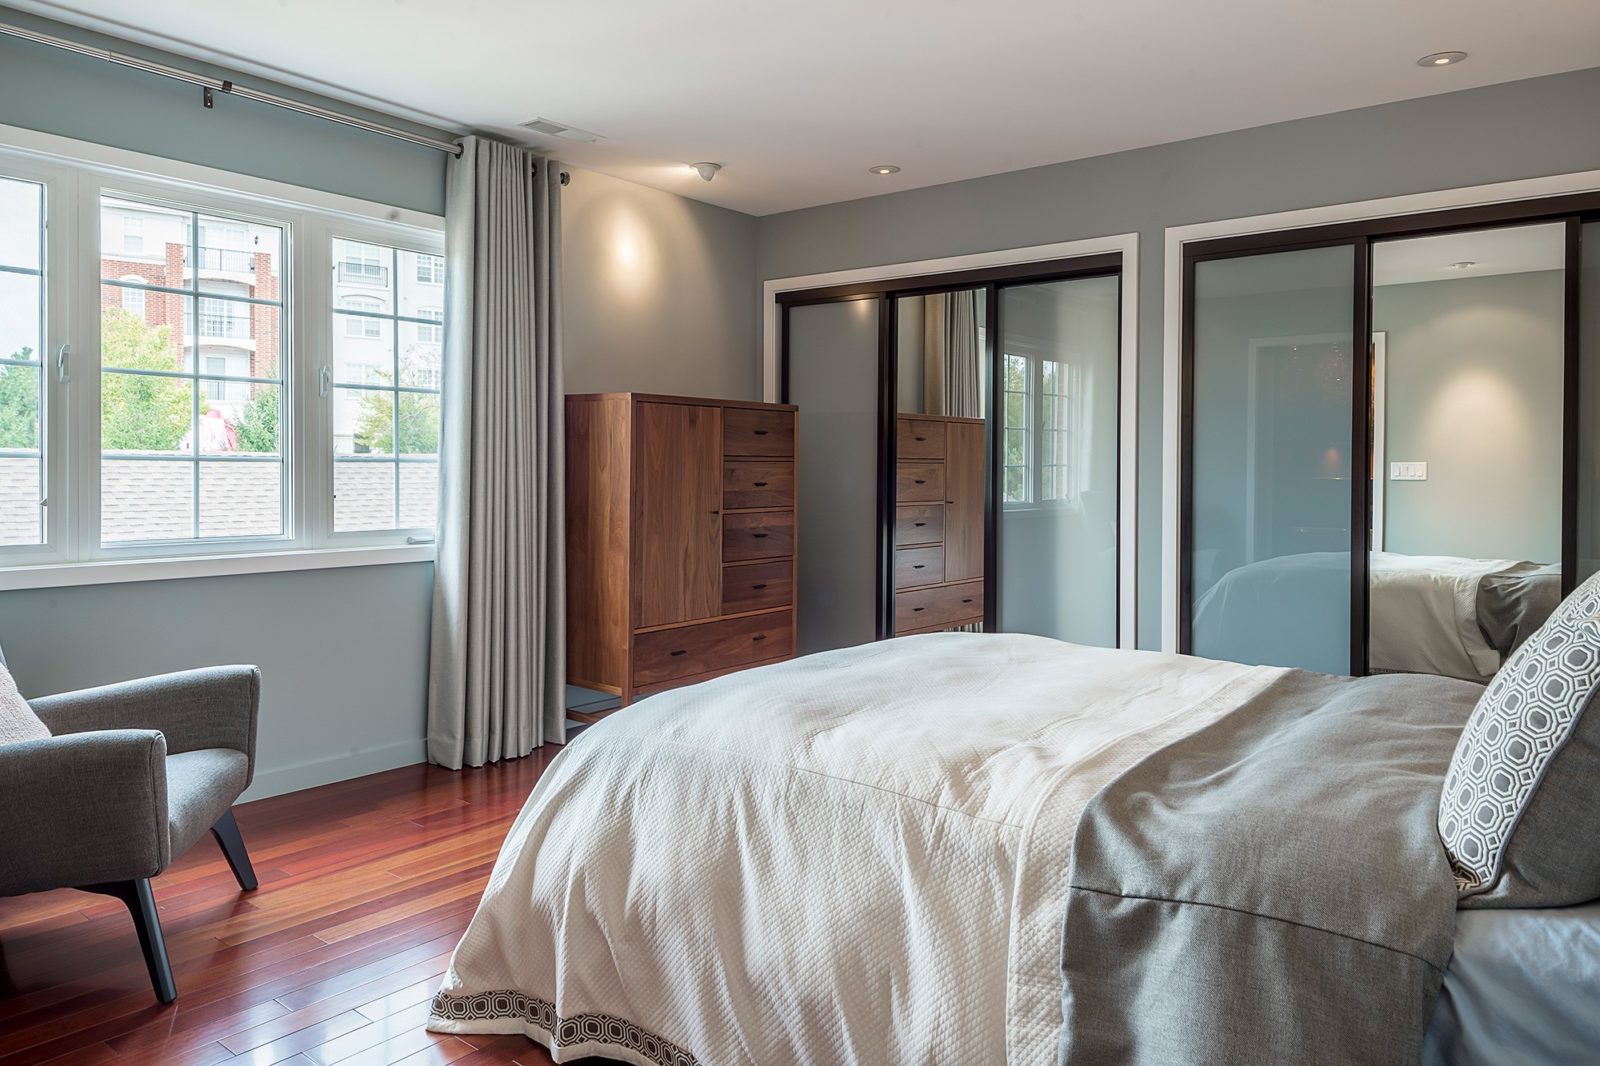 bedroom renovation hardwood floors double closets oak dresser grey sitting chair comfortable bed